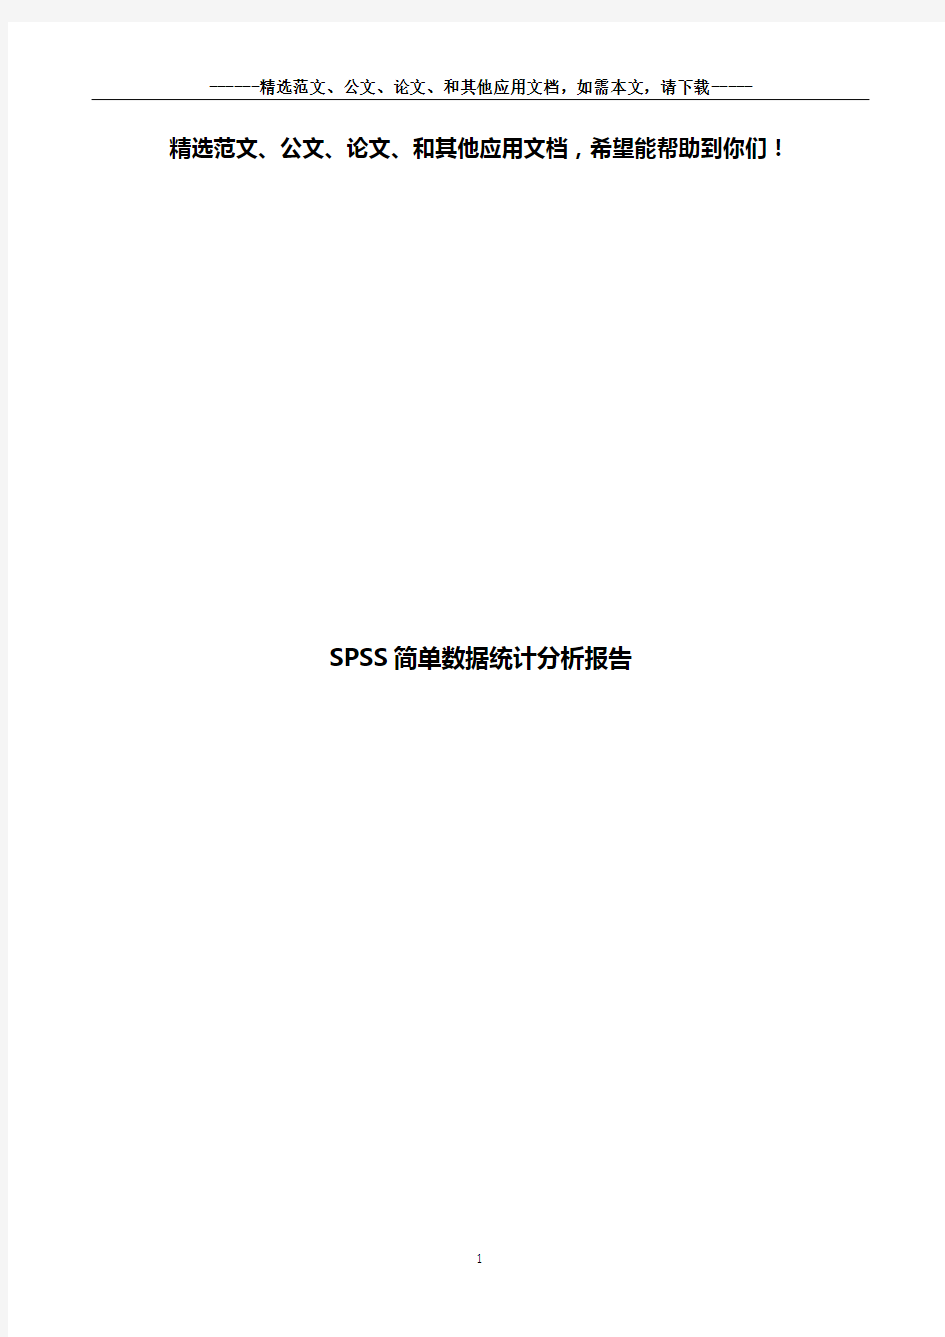 SPSS简单数据统计分析报告